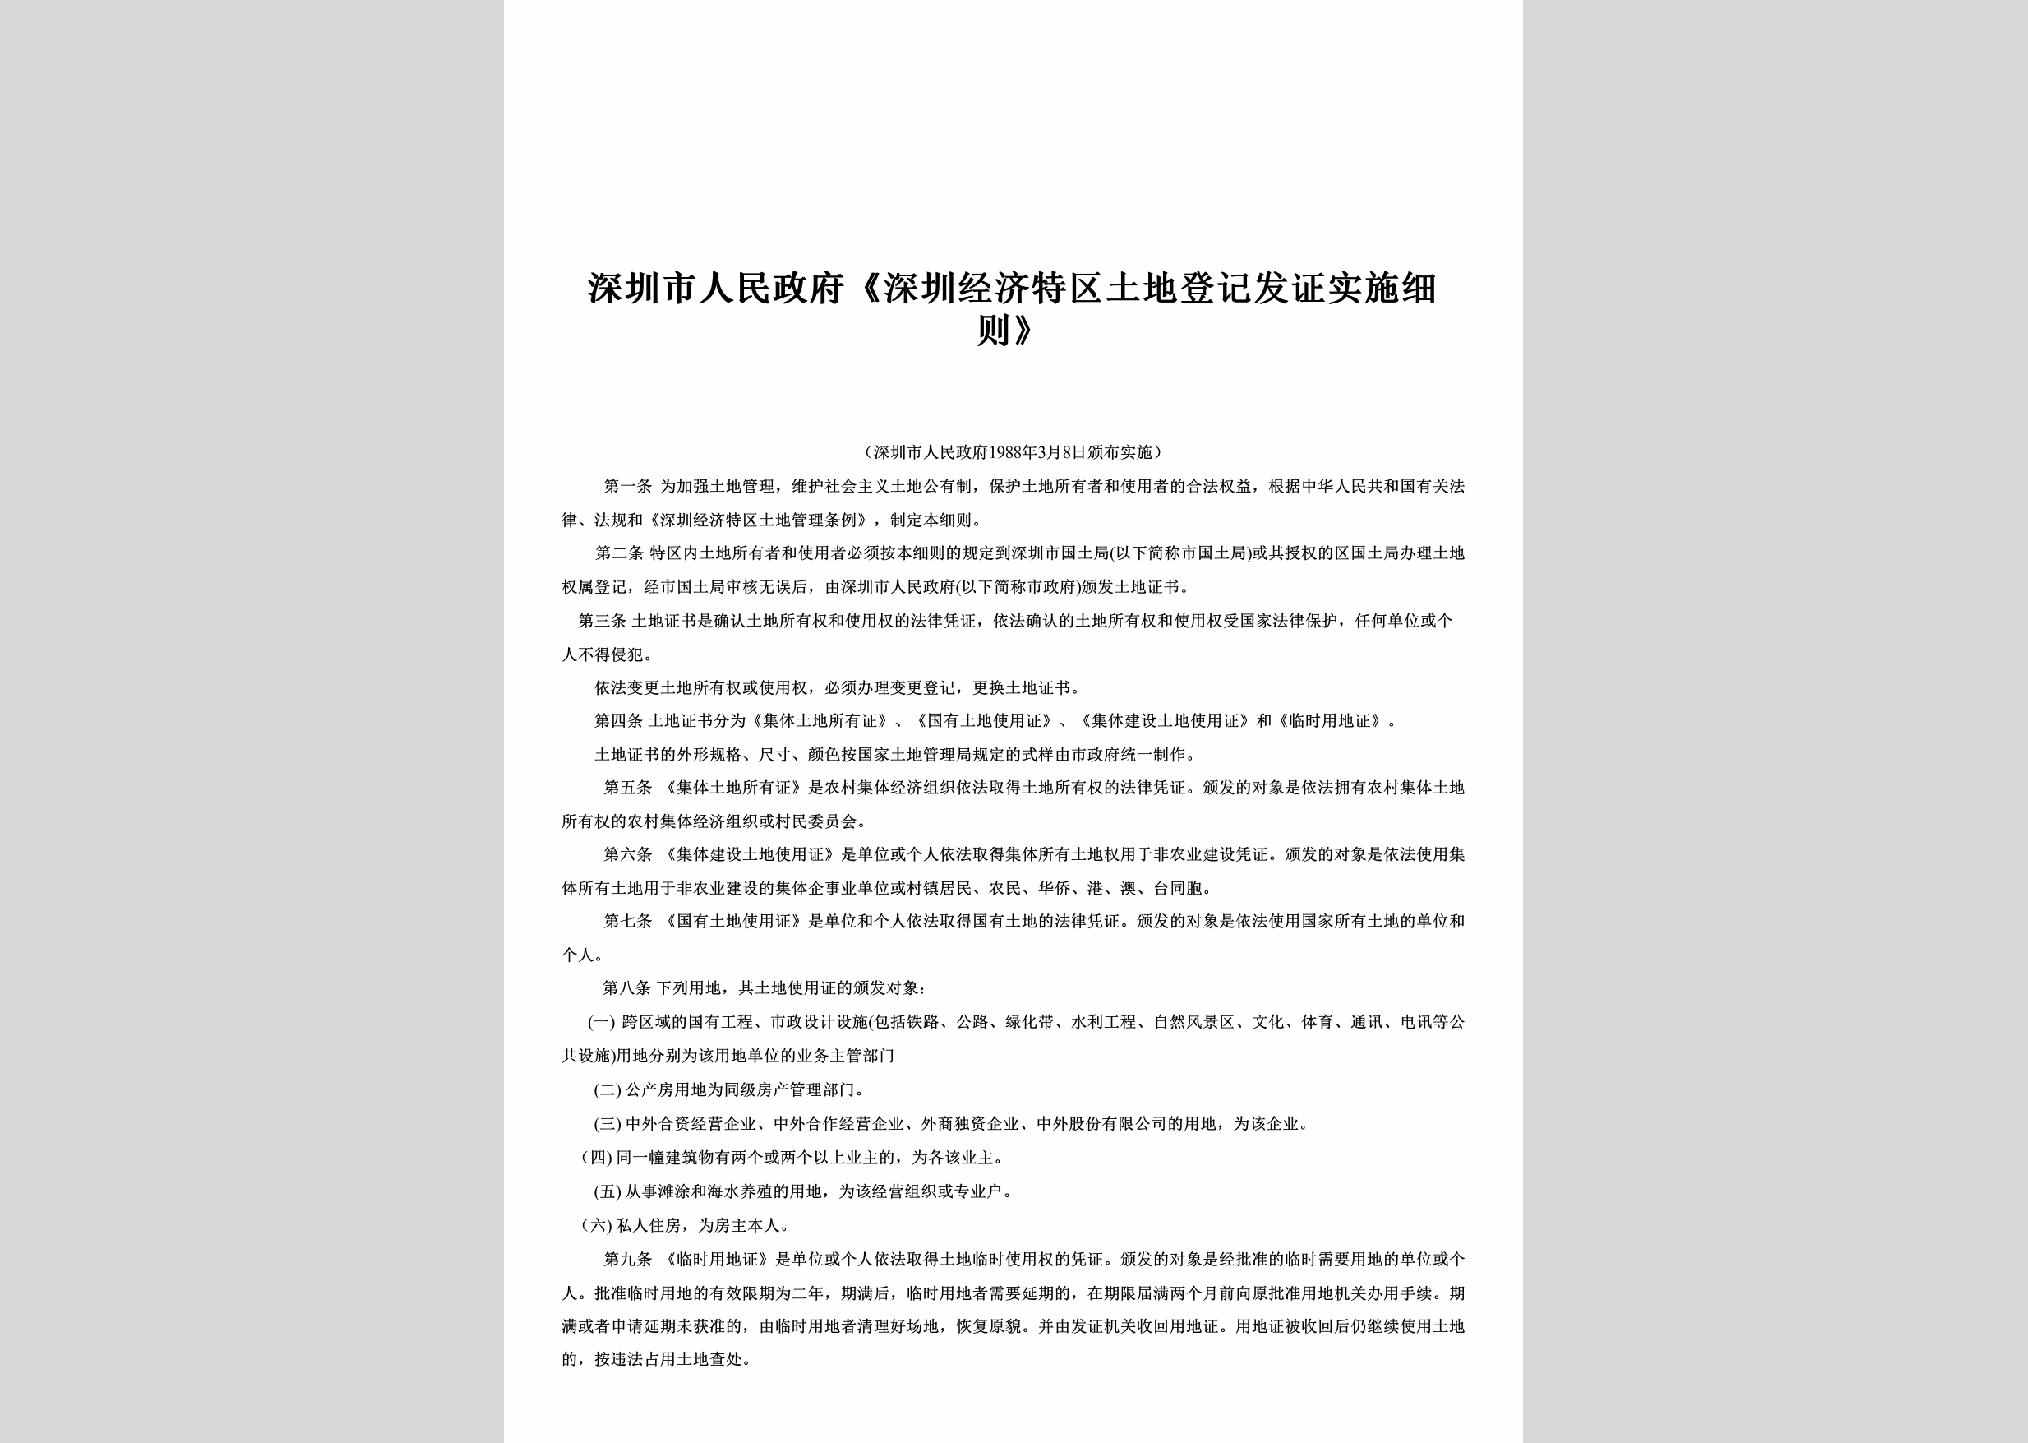 GD-TQDJSSXZ-1988：《深圳经济特区土地登记发证实施细则》